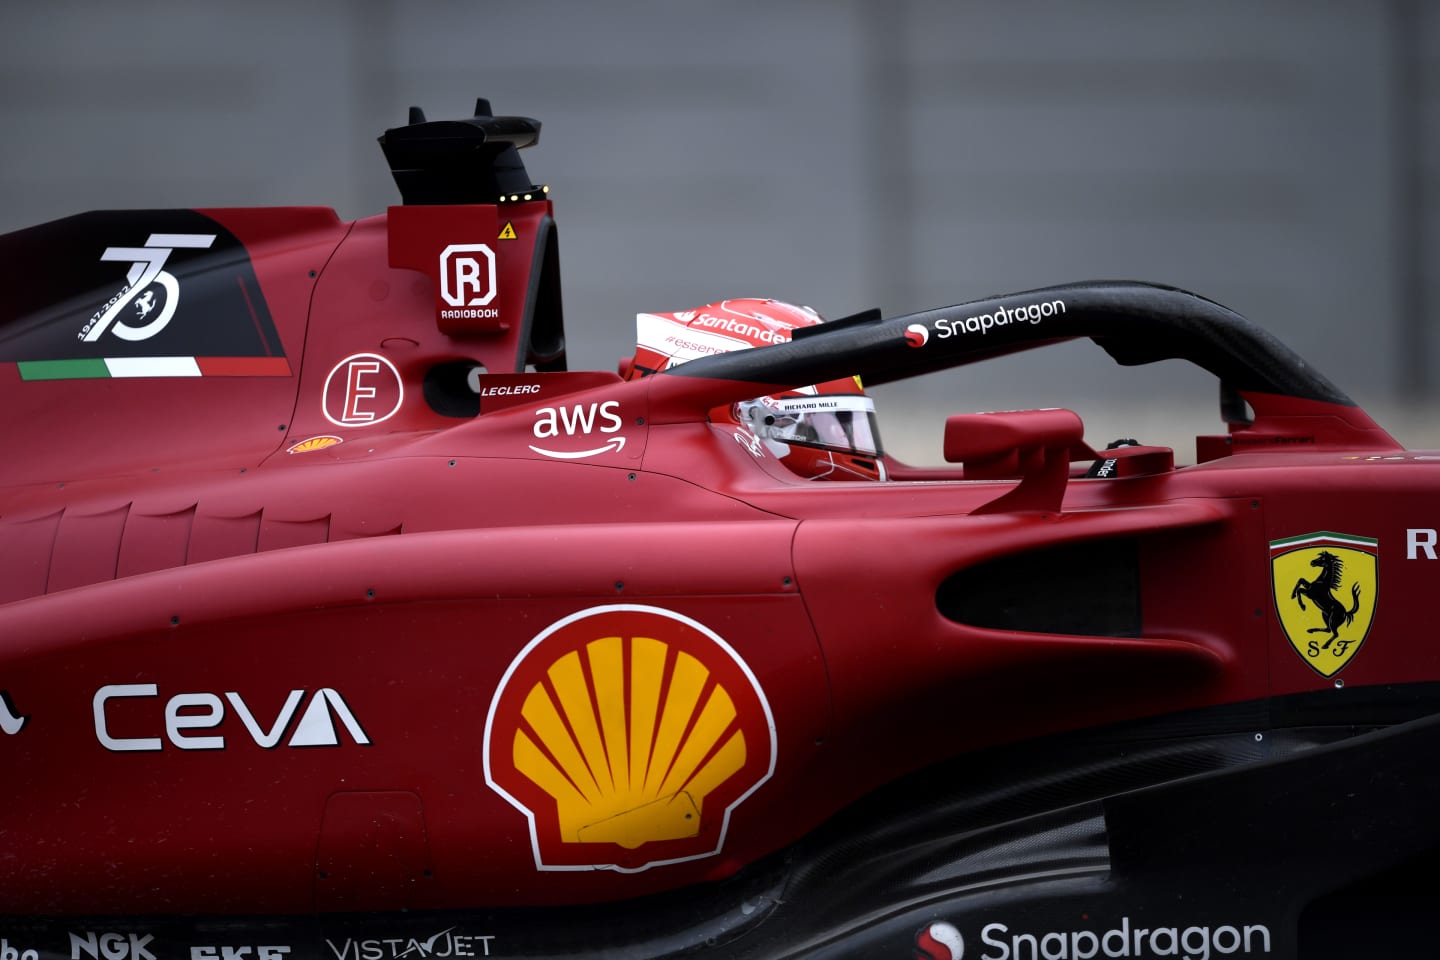 SPA, BELGIUM - AUGUST 27: Charles Leclerc of Monaco driving the (16) Ferrari F1-75 runs through the